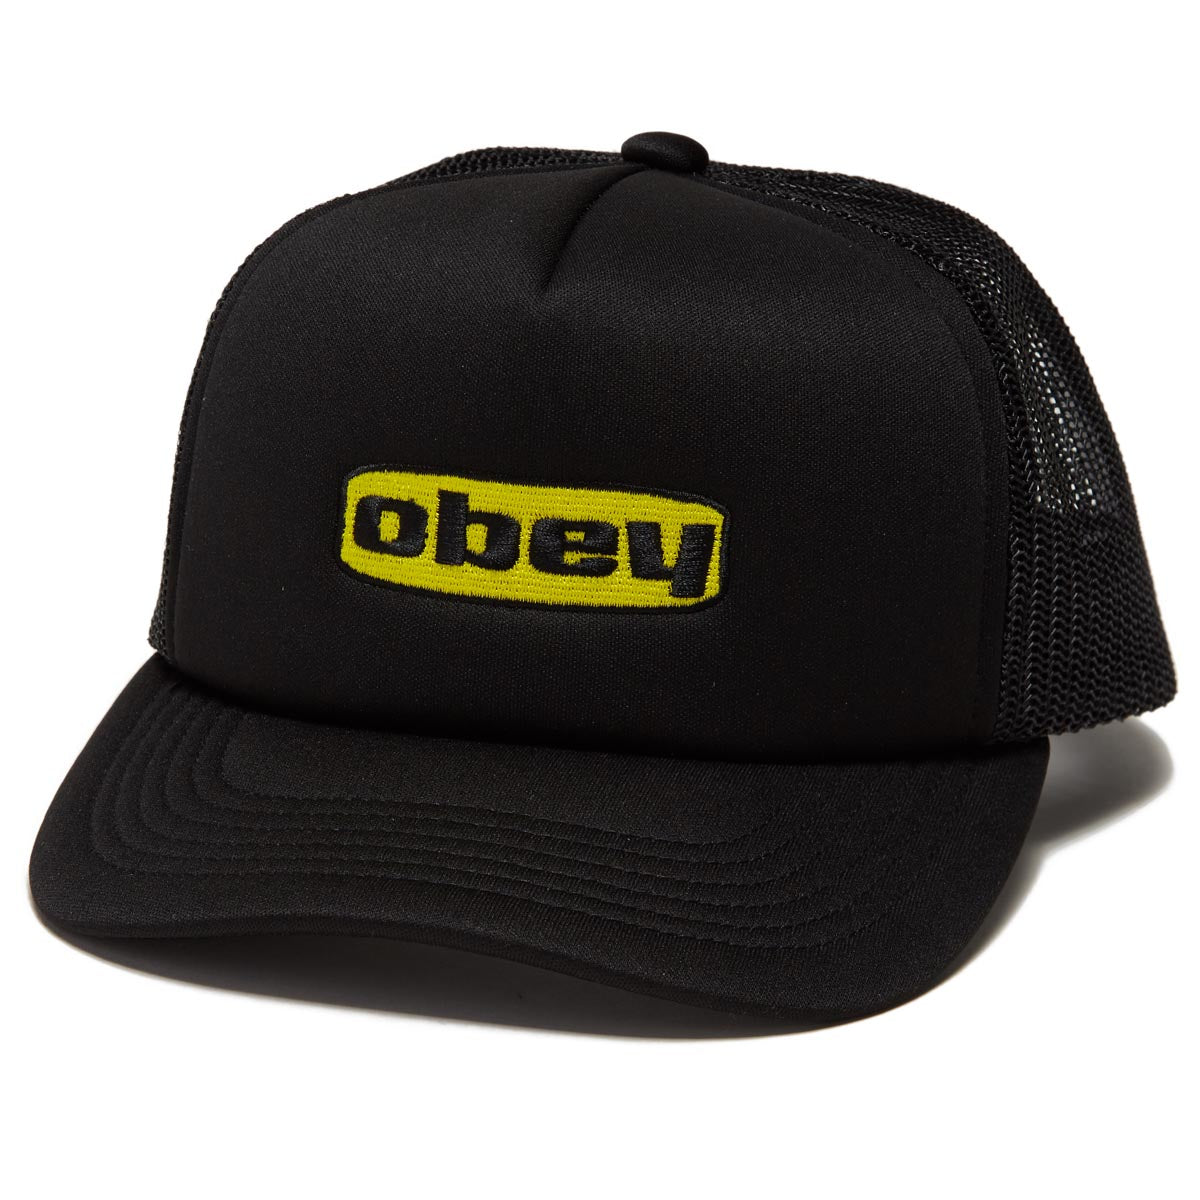 Obey Direct Trucker Hat - Black image 1